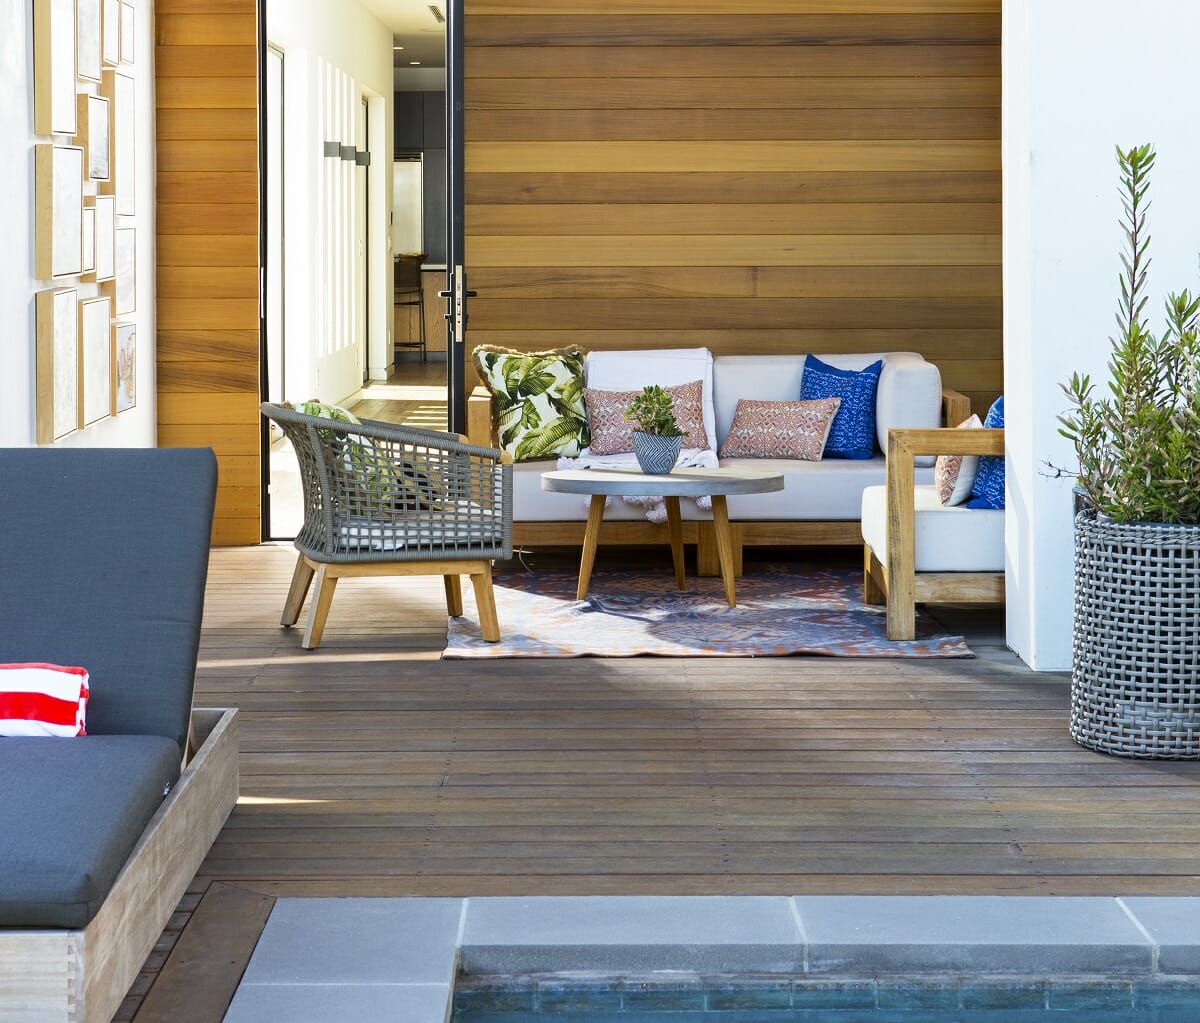 Designer backyard with outdoor patio ideas by Lori D